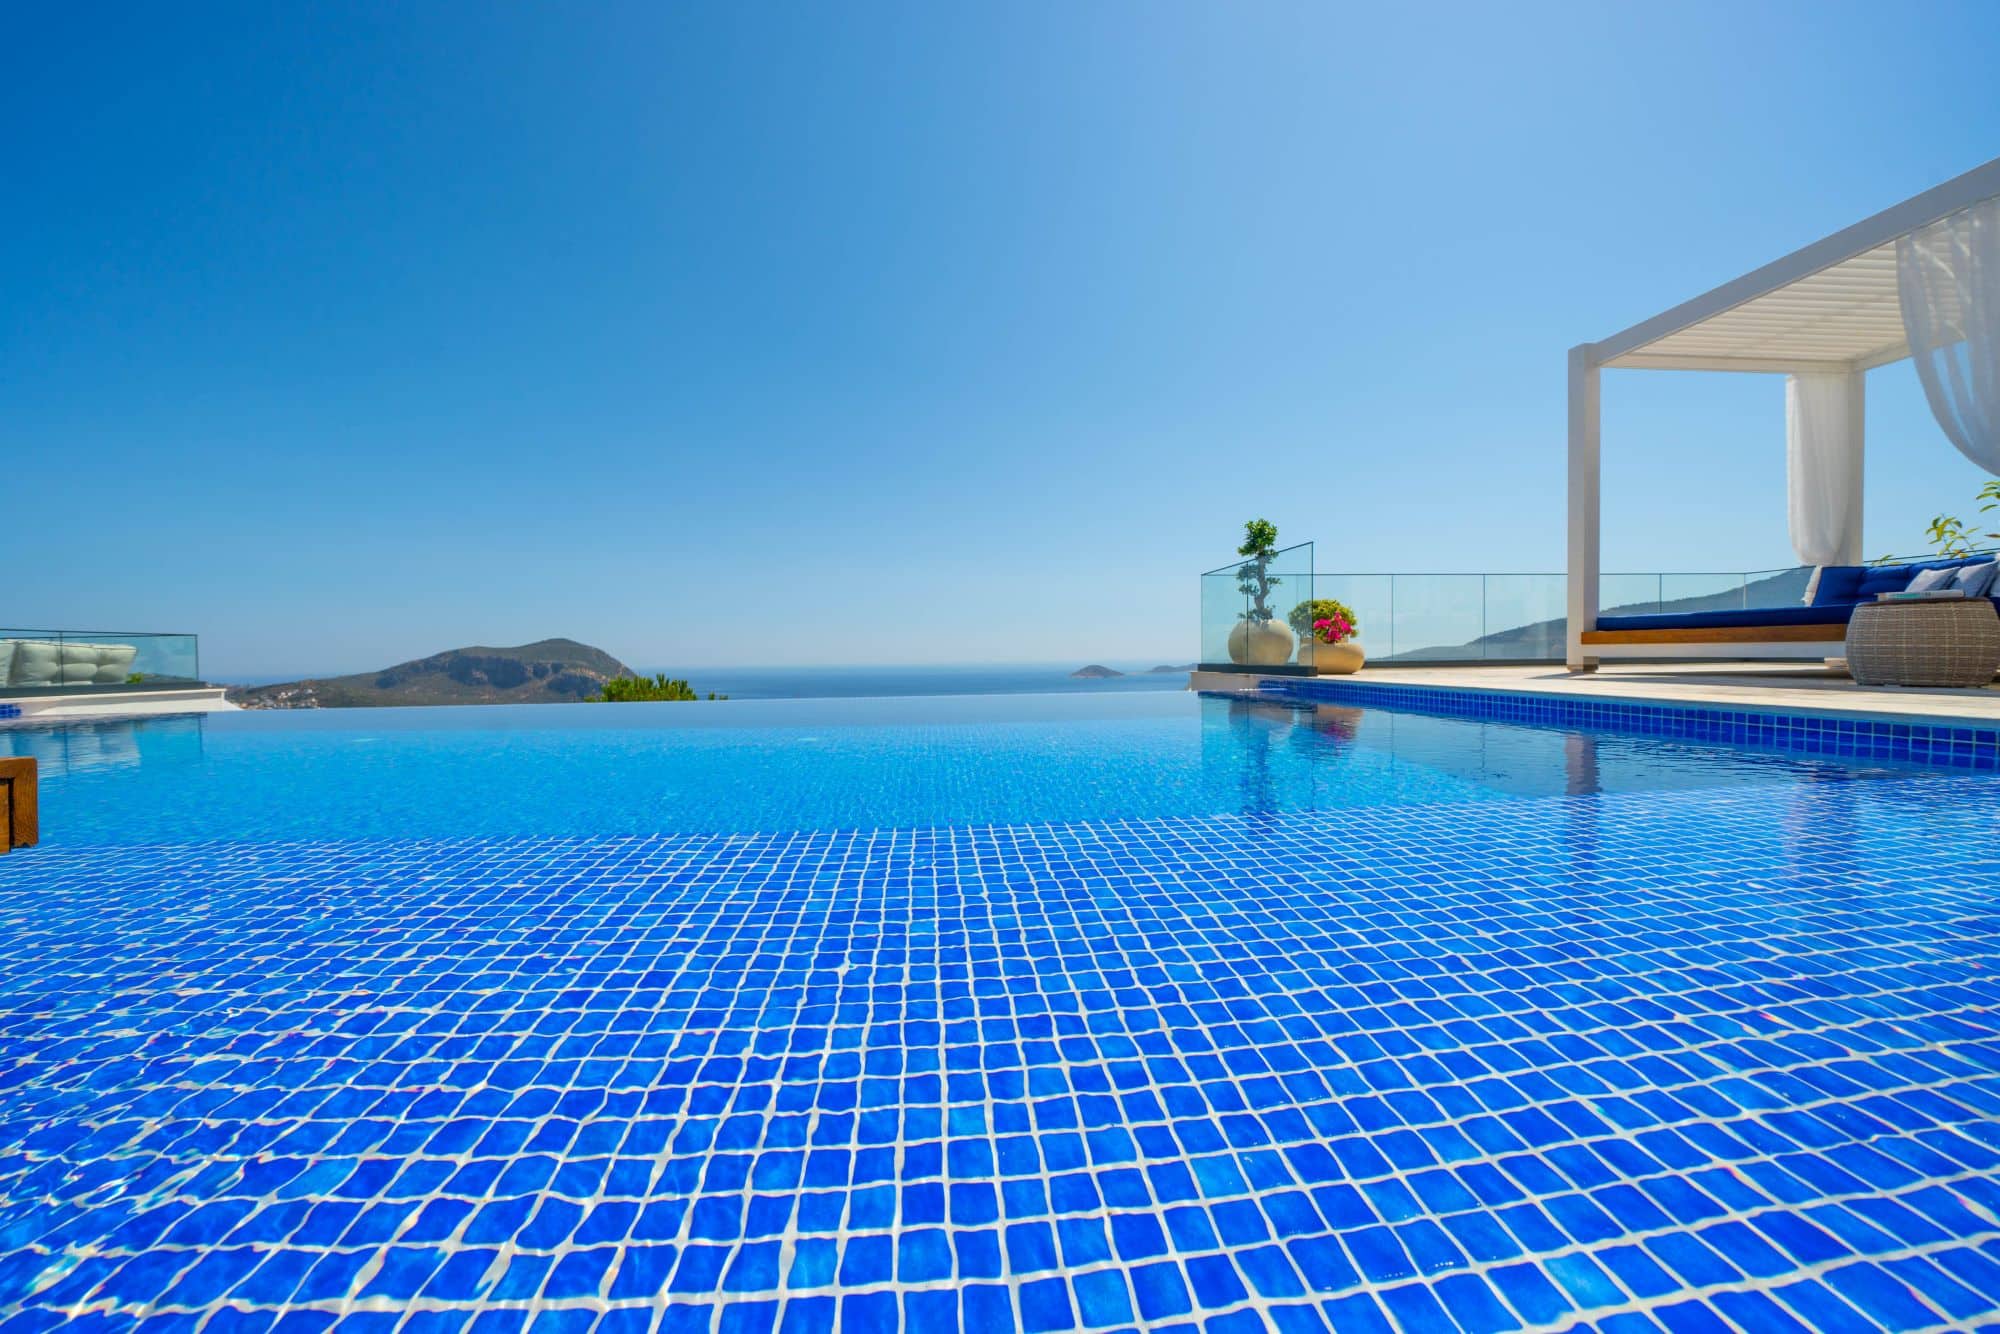 Villa Anatolia swimming pool and blue sky